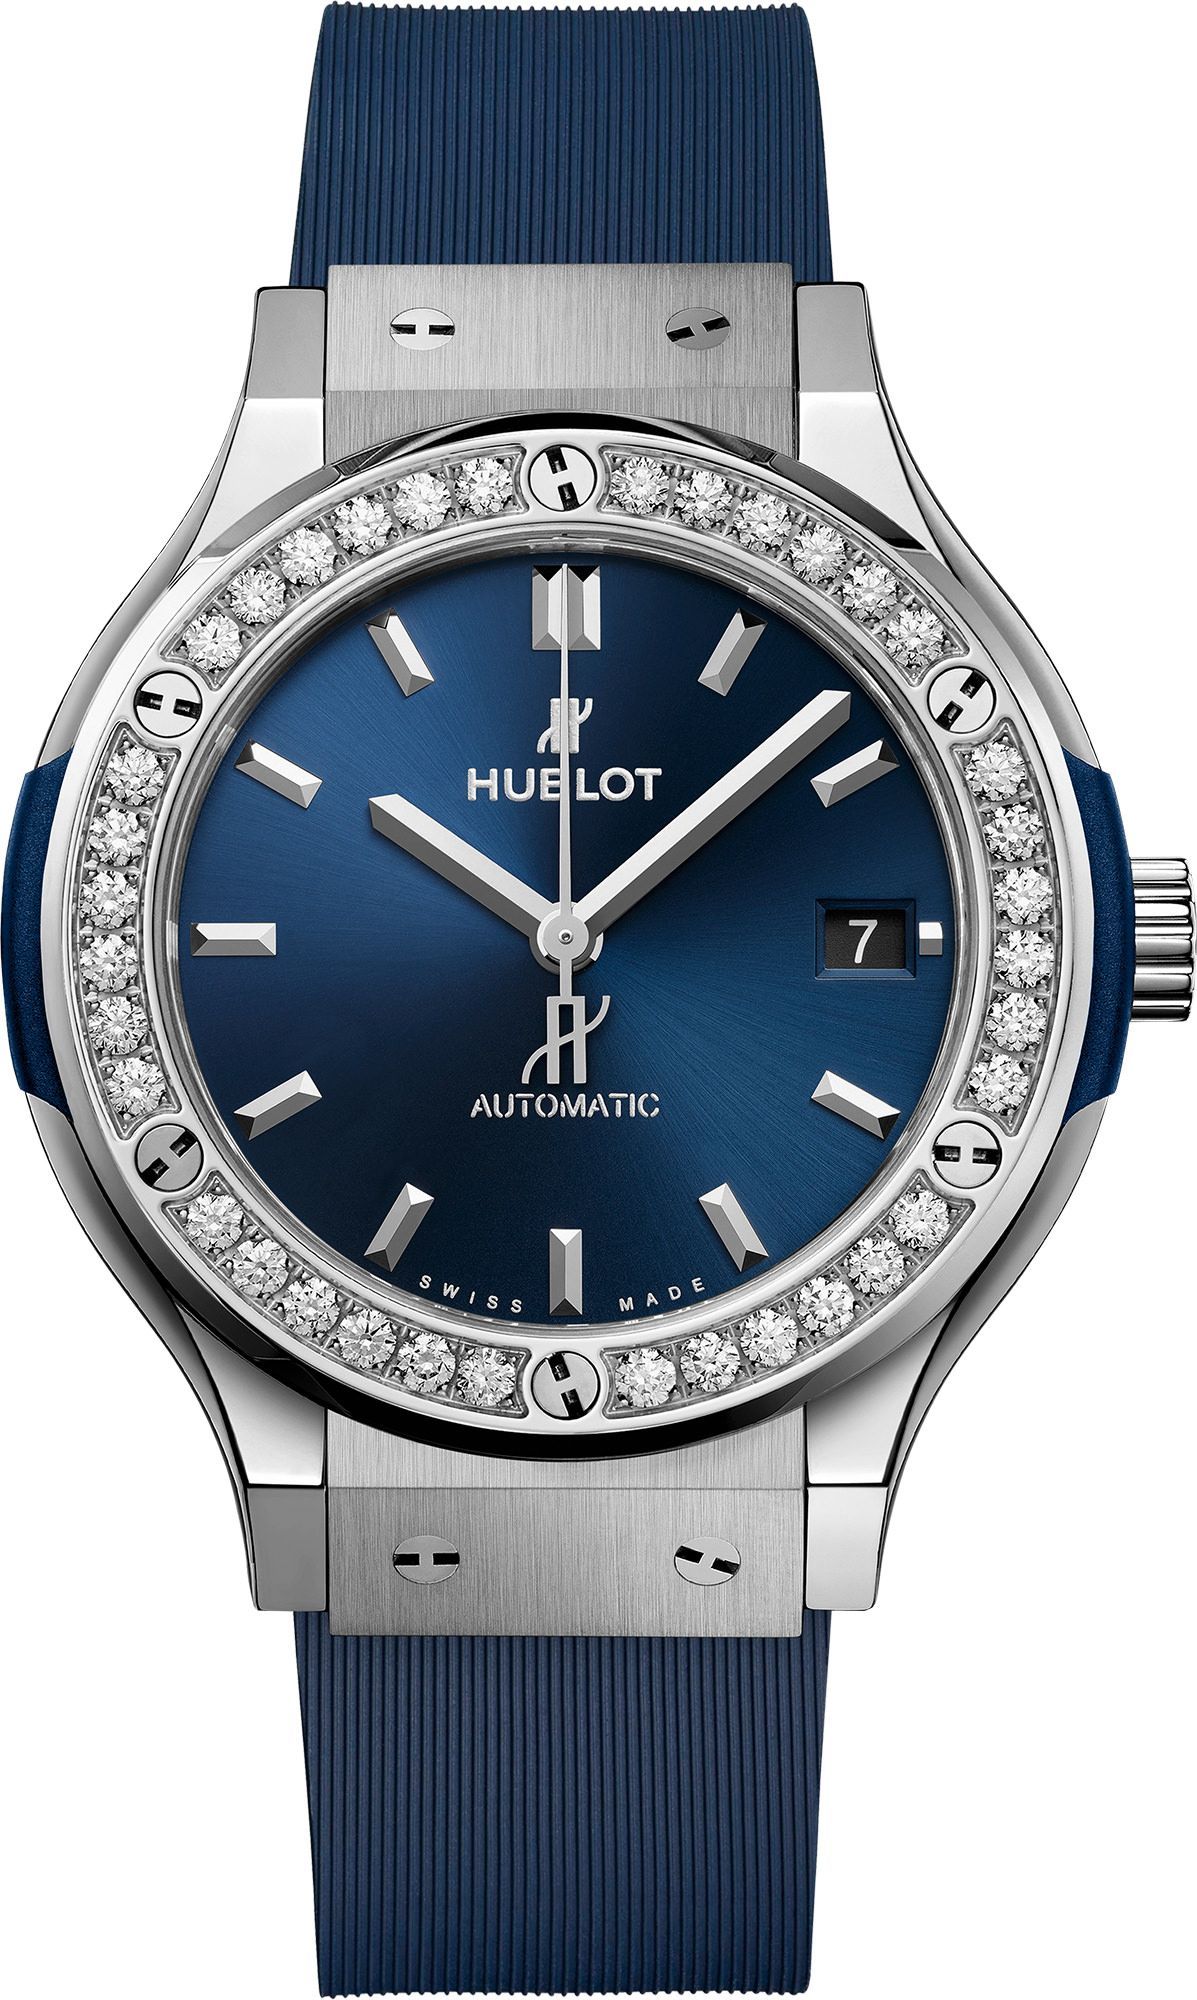 Hublot 3-Hands 38 mm Watch in Blue Dial